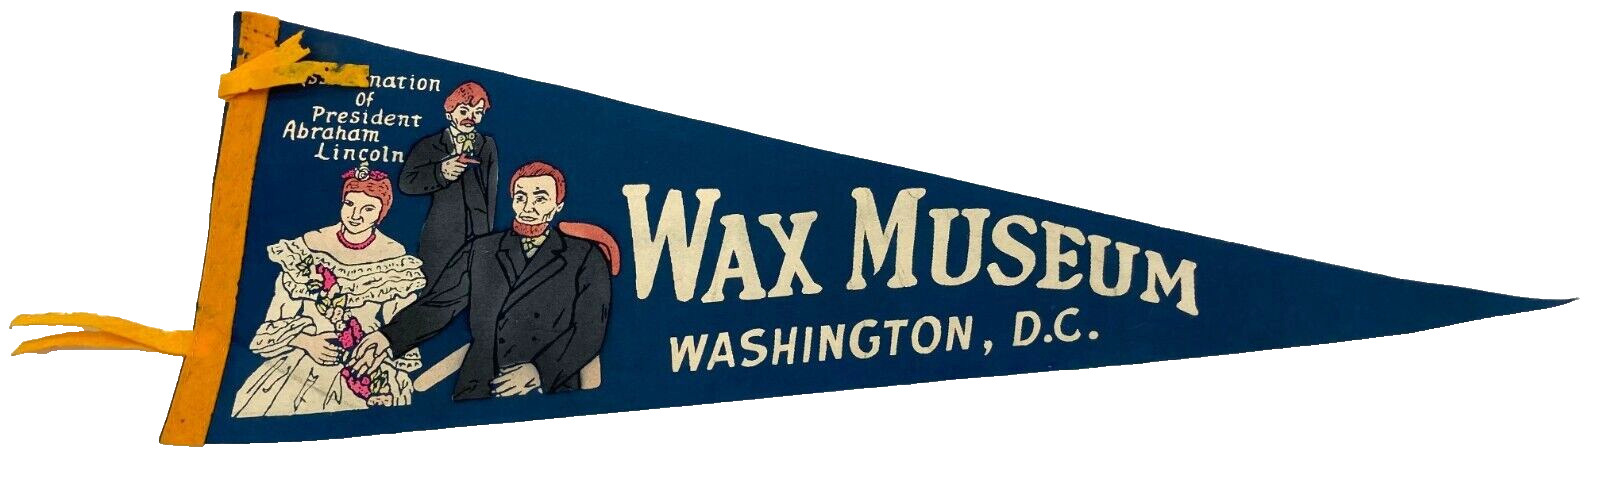 VTG Wax Museum Washington, D.C. 